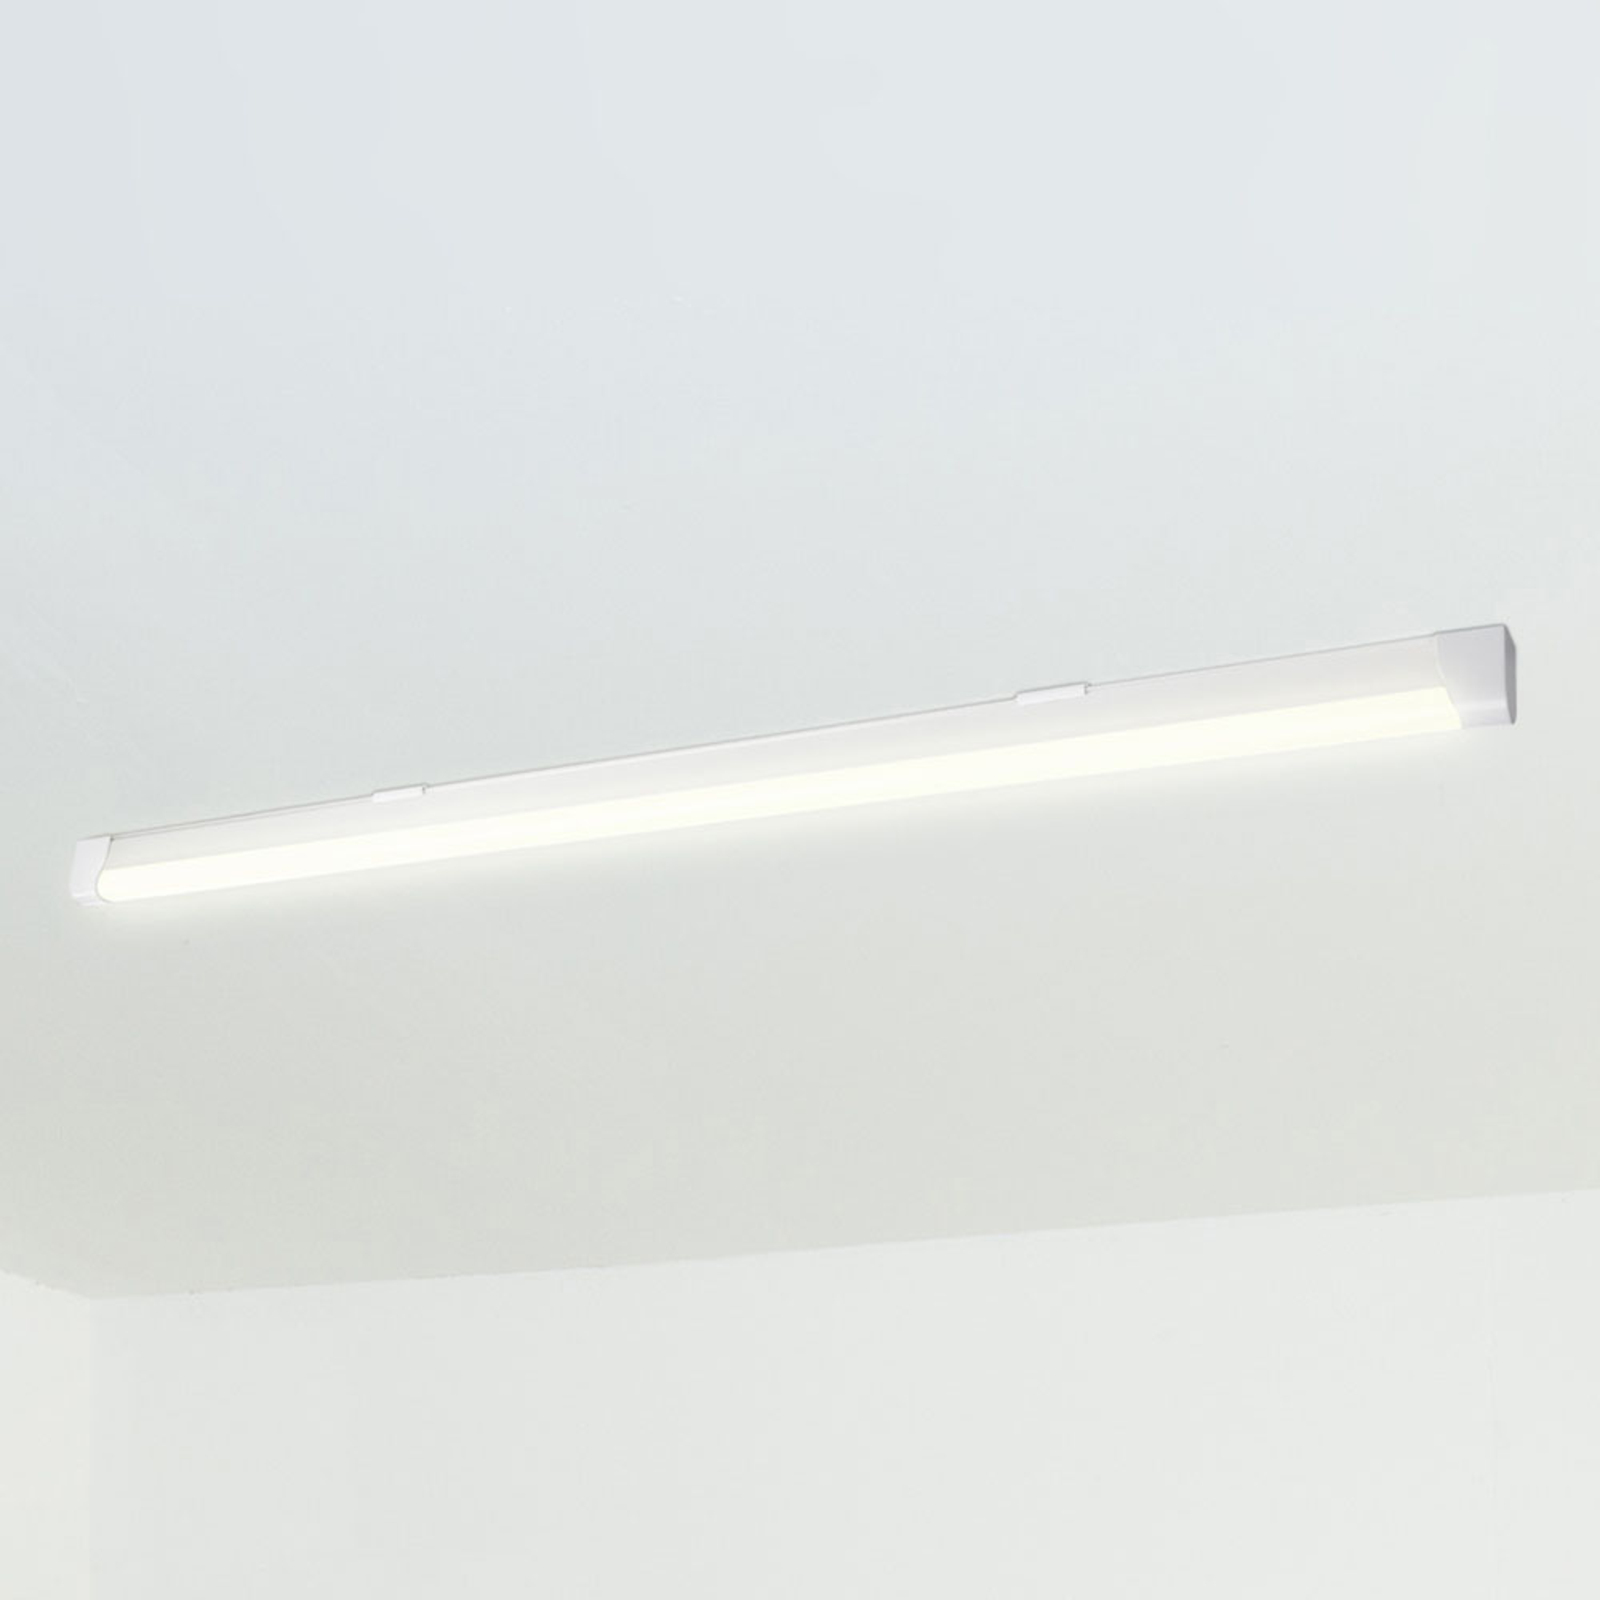 Müller Licht Ecoline 120 LED ceiling light